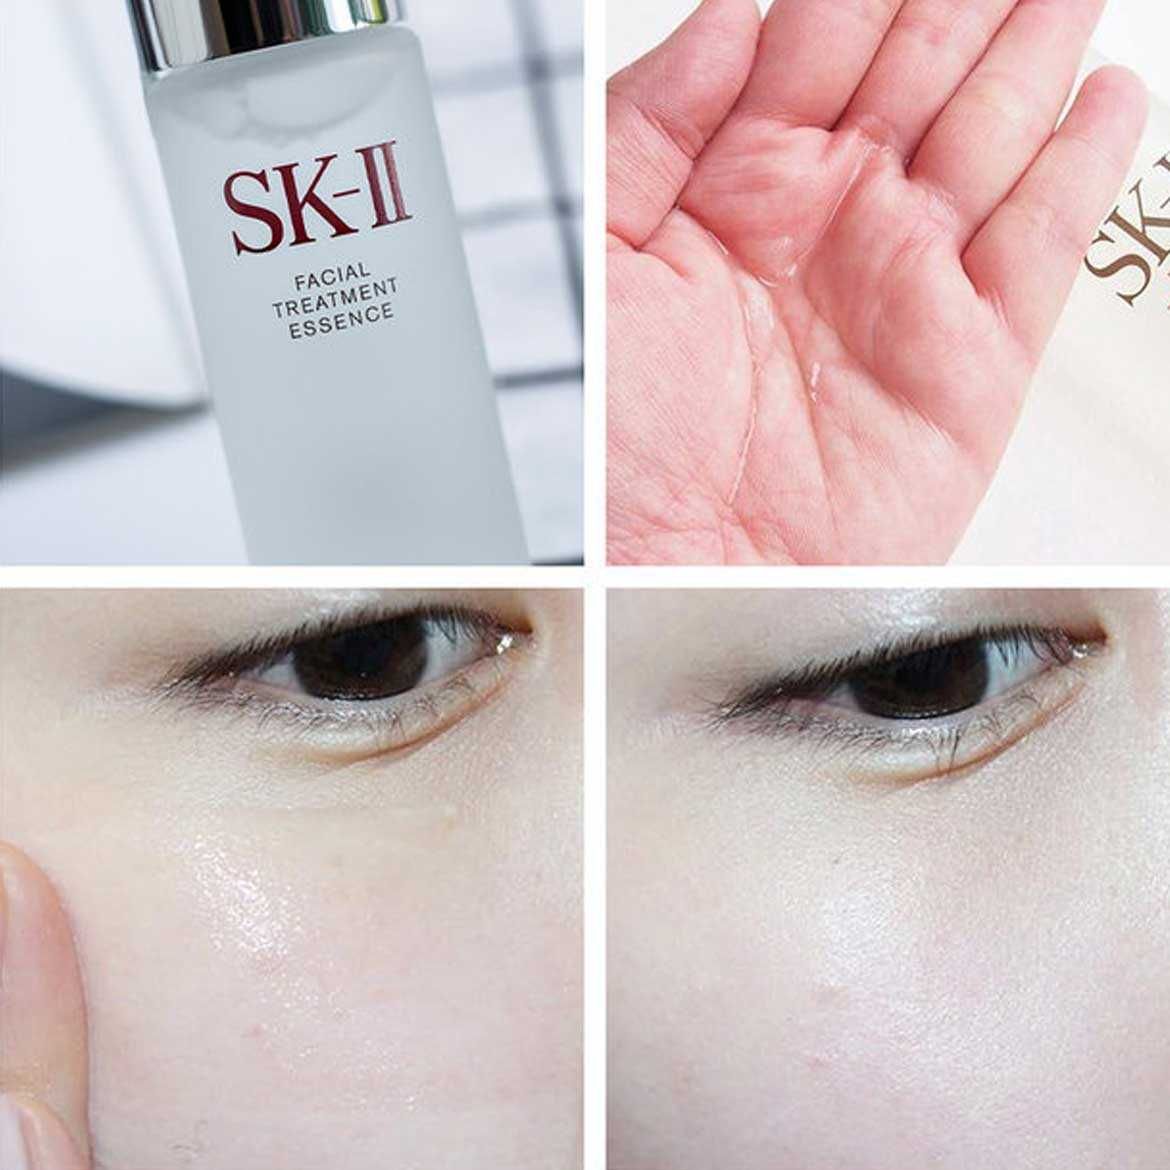 Nước Thần SK-II Facial Treatment Essence – Bicicosmetics